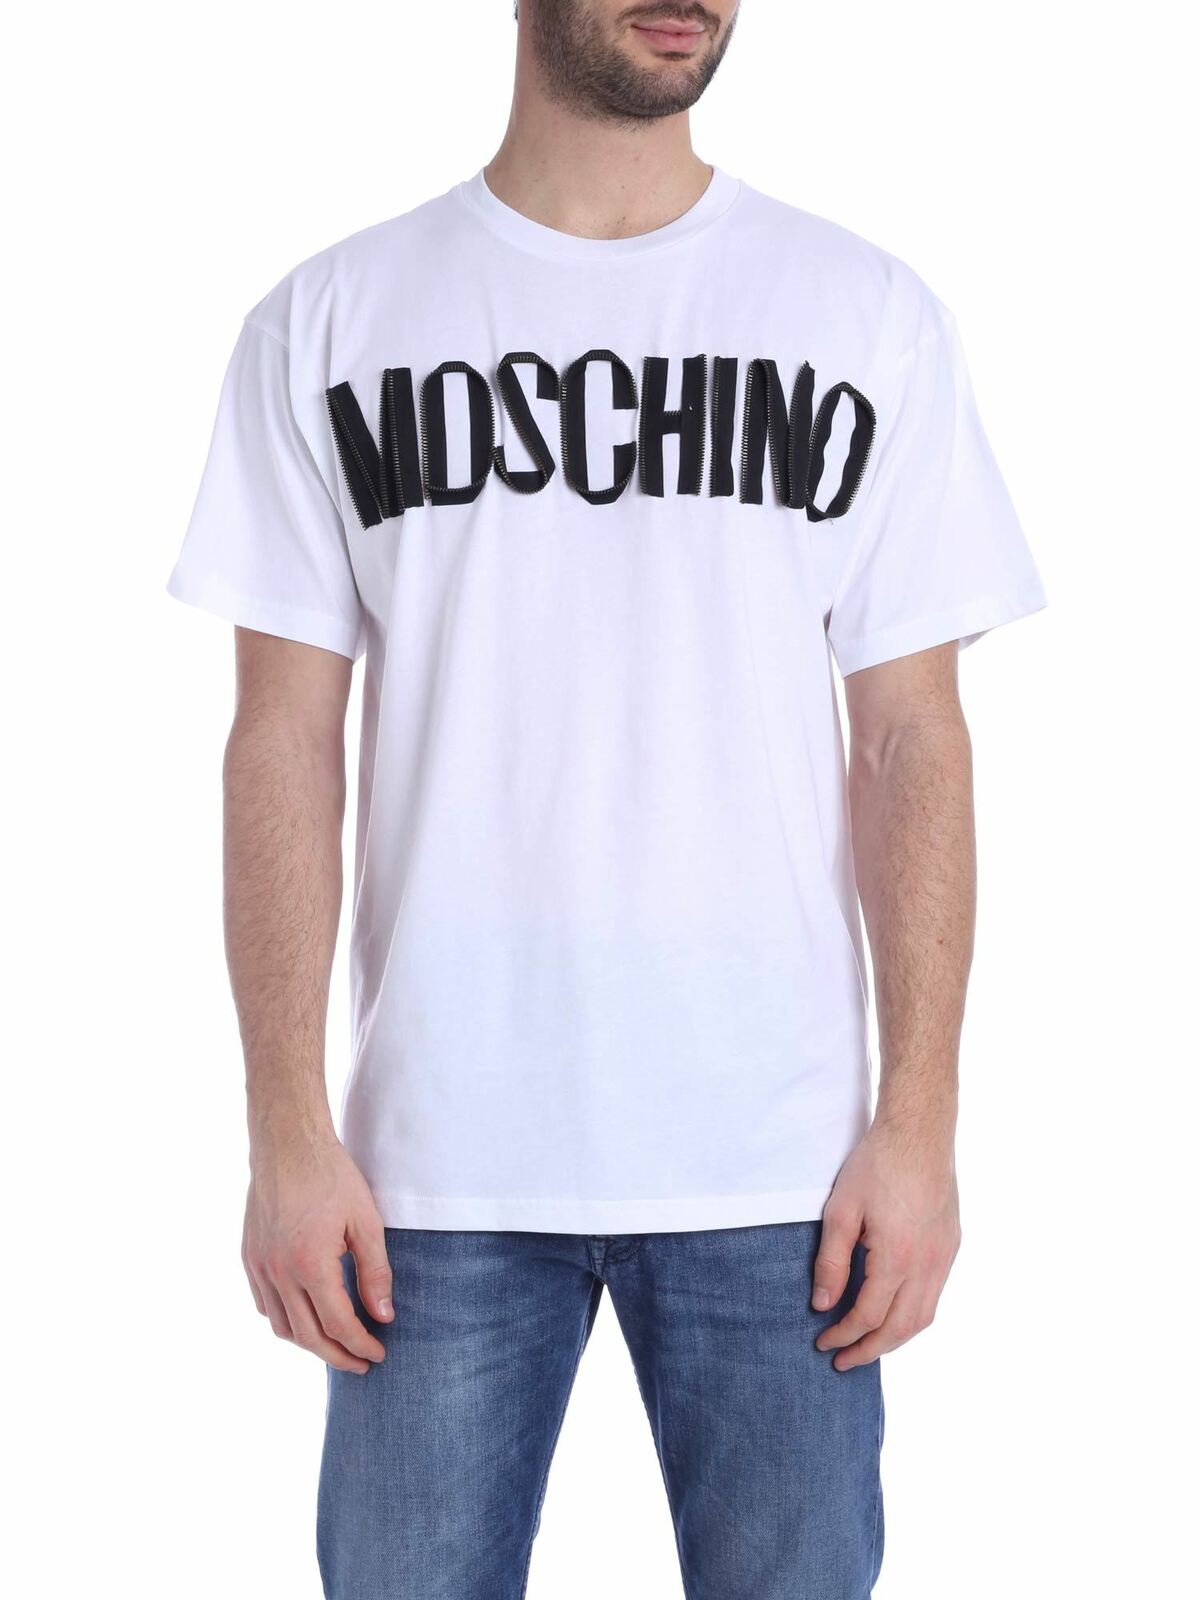 Moschino White '100% PURE MOSCHINO' Tote